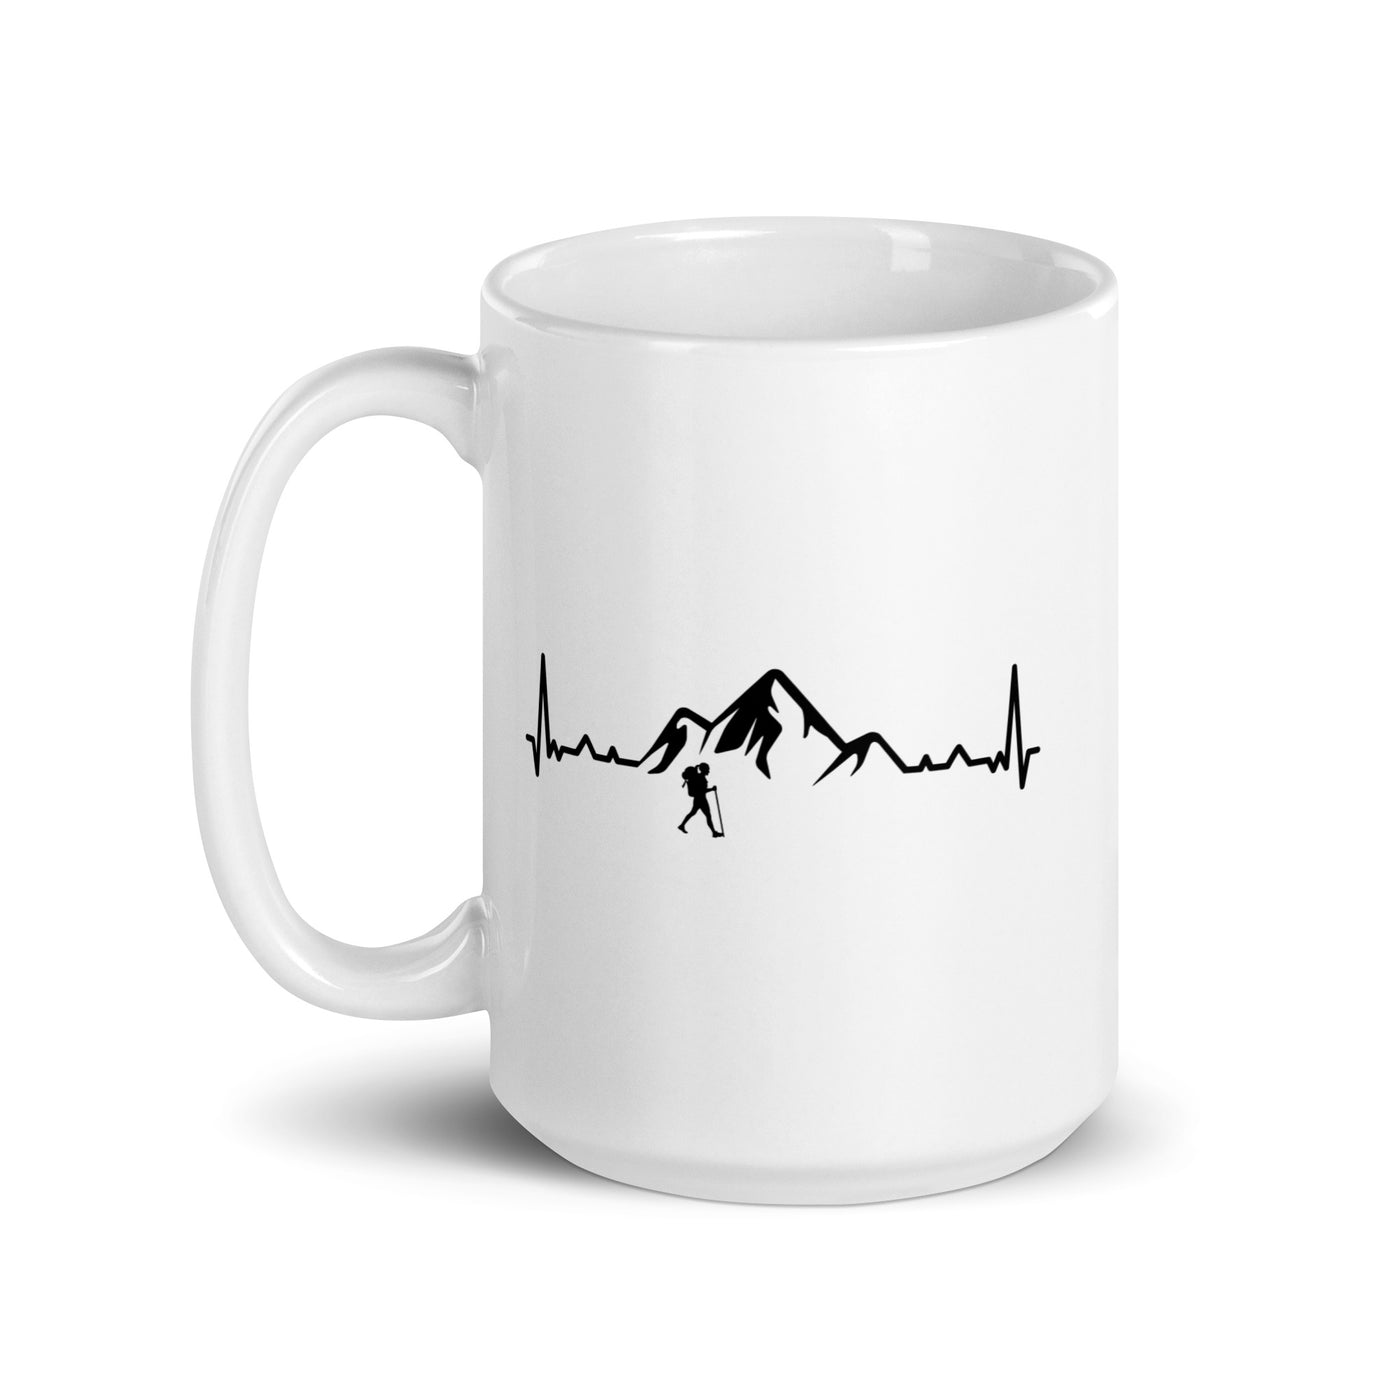 Heartbeat Mountain 1 And Hiking - Tasse wandern